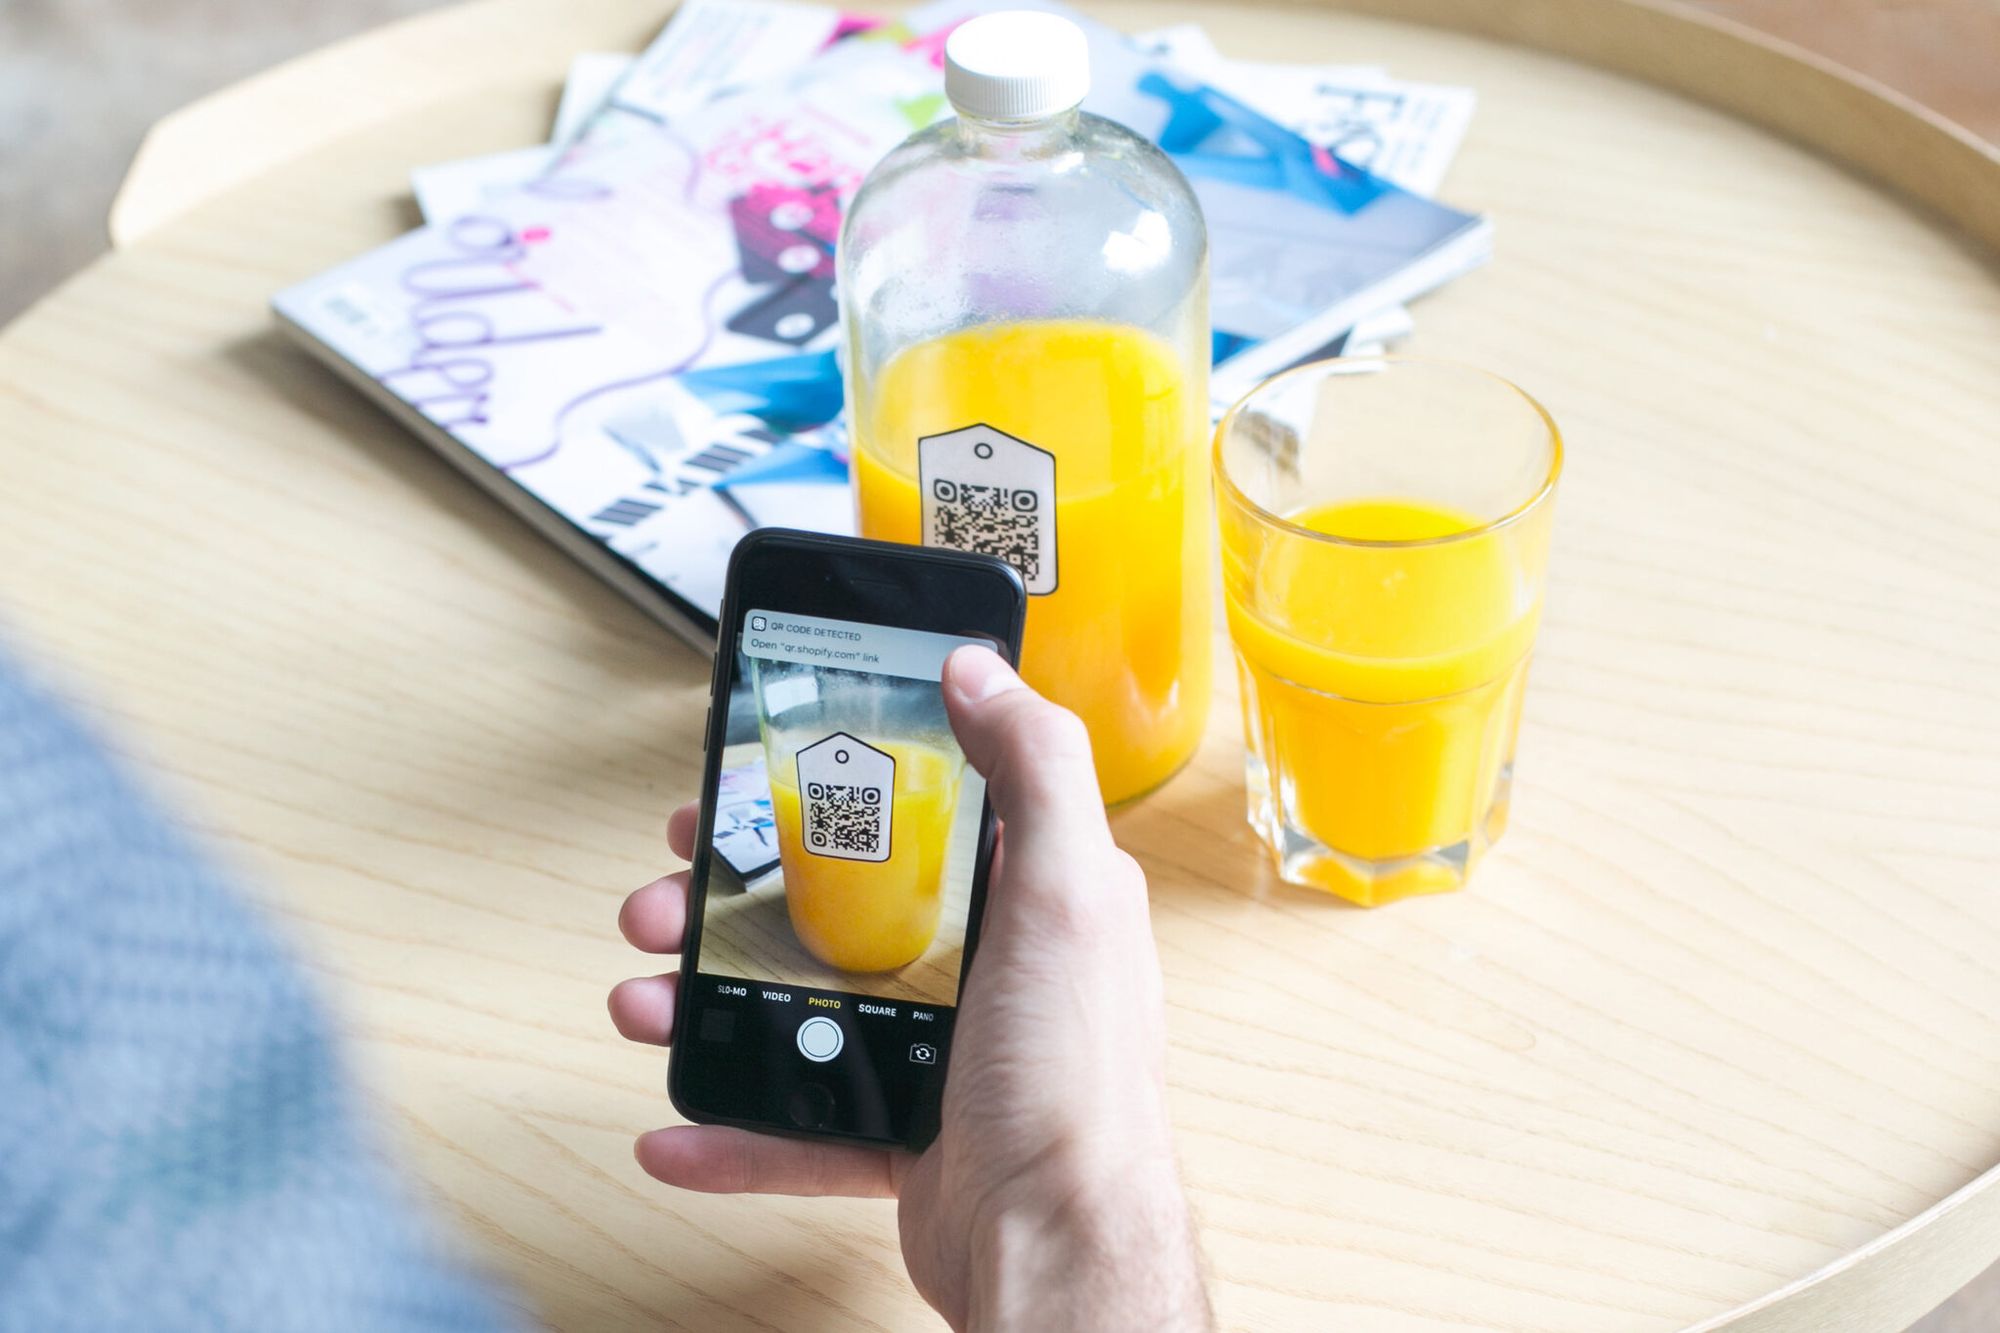 a hand scanning a QR code on a juice bottle